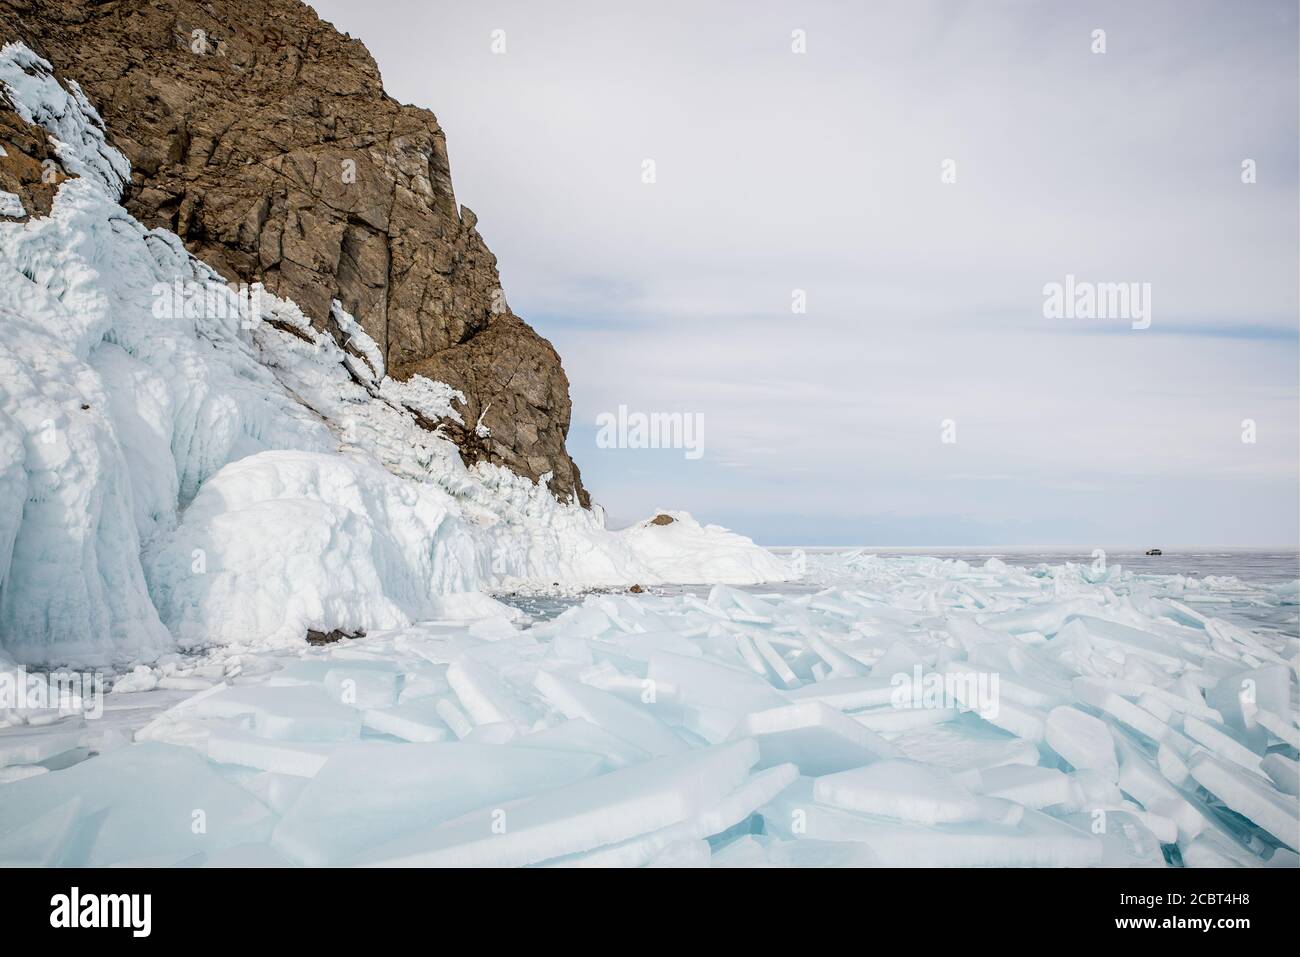 Bloques de hielo en la superficie congelada del Lago Baikal, Rusia Foto de stock